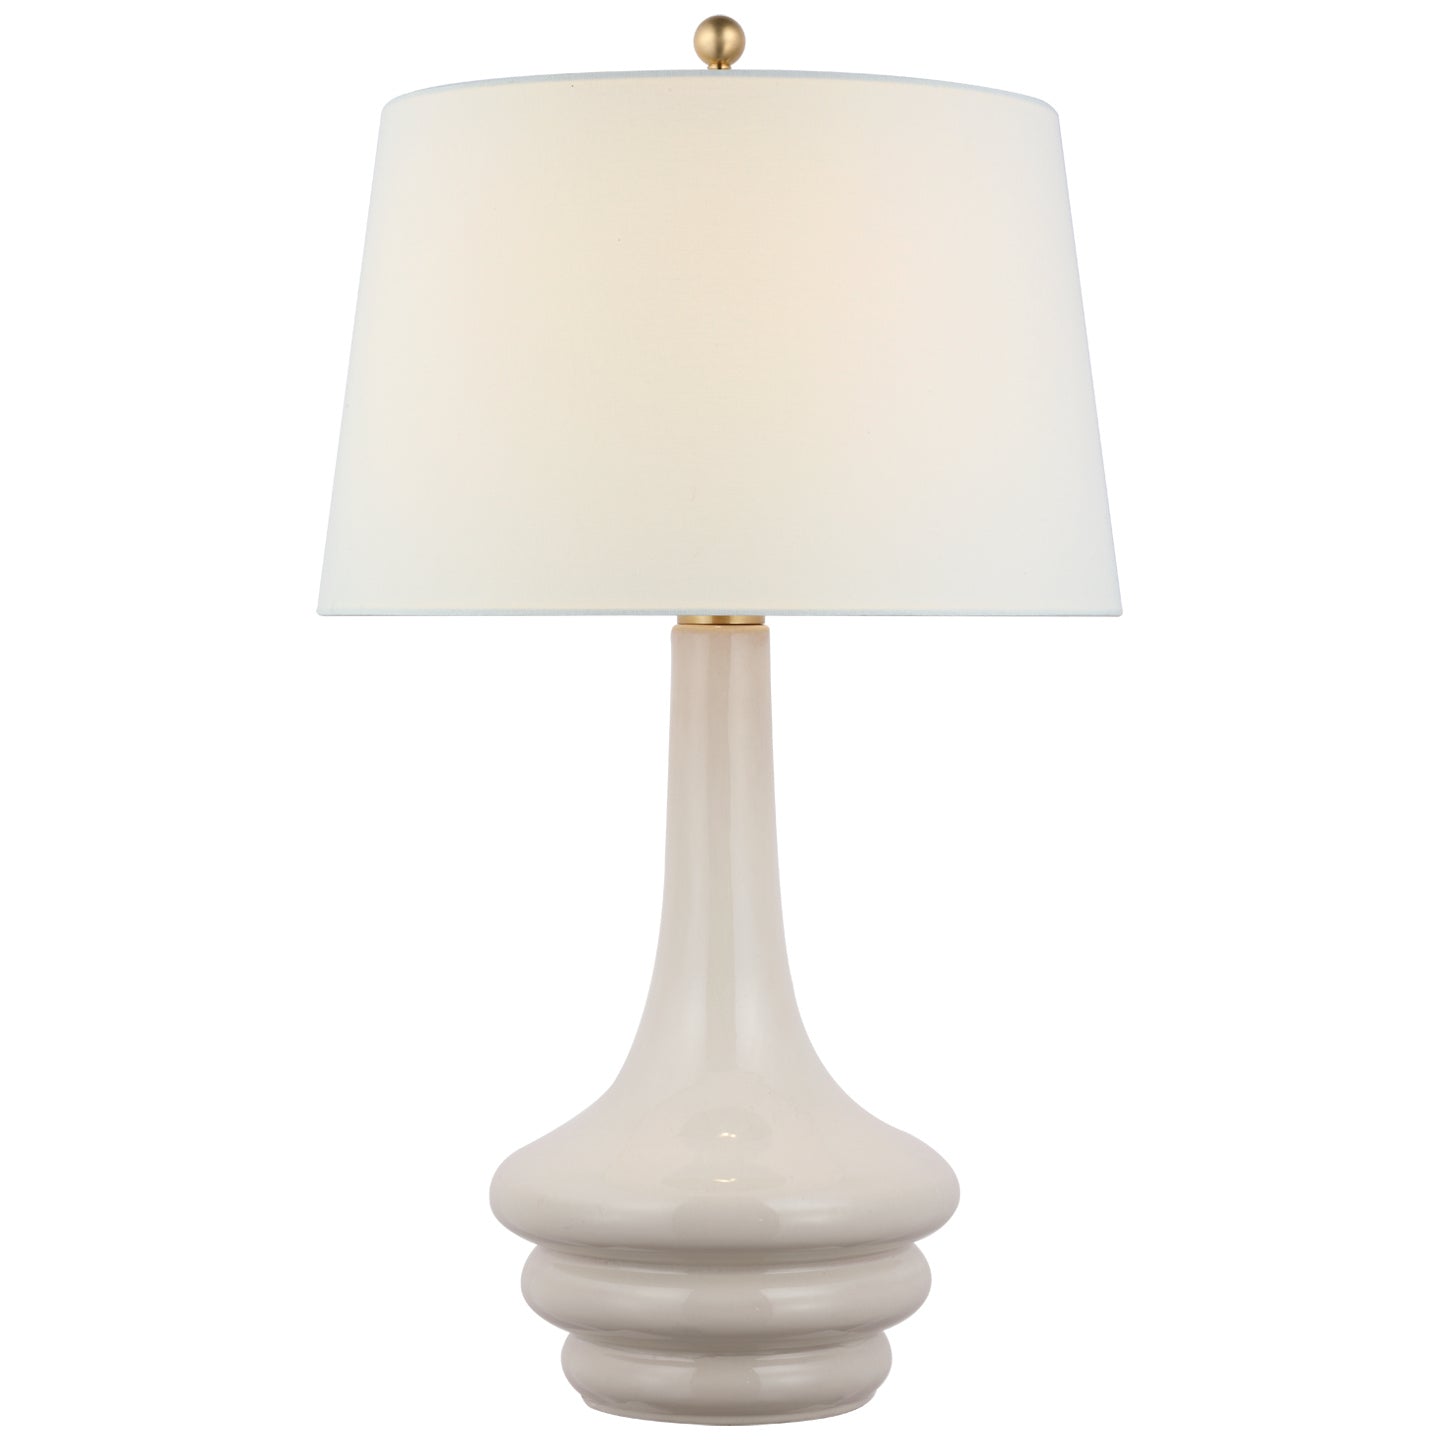 Visual Comfort Signature - CHA 8688IVO-L - LED Table Lamp - Wallis - Ivory